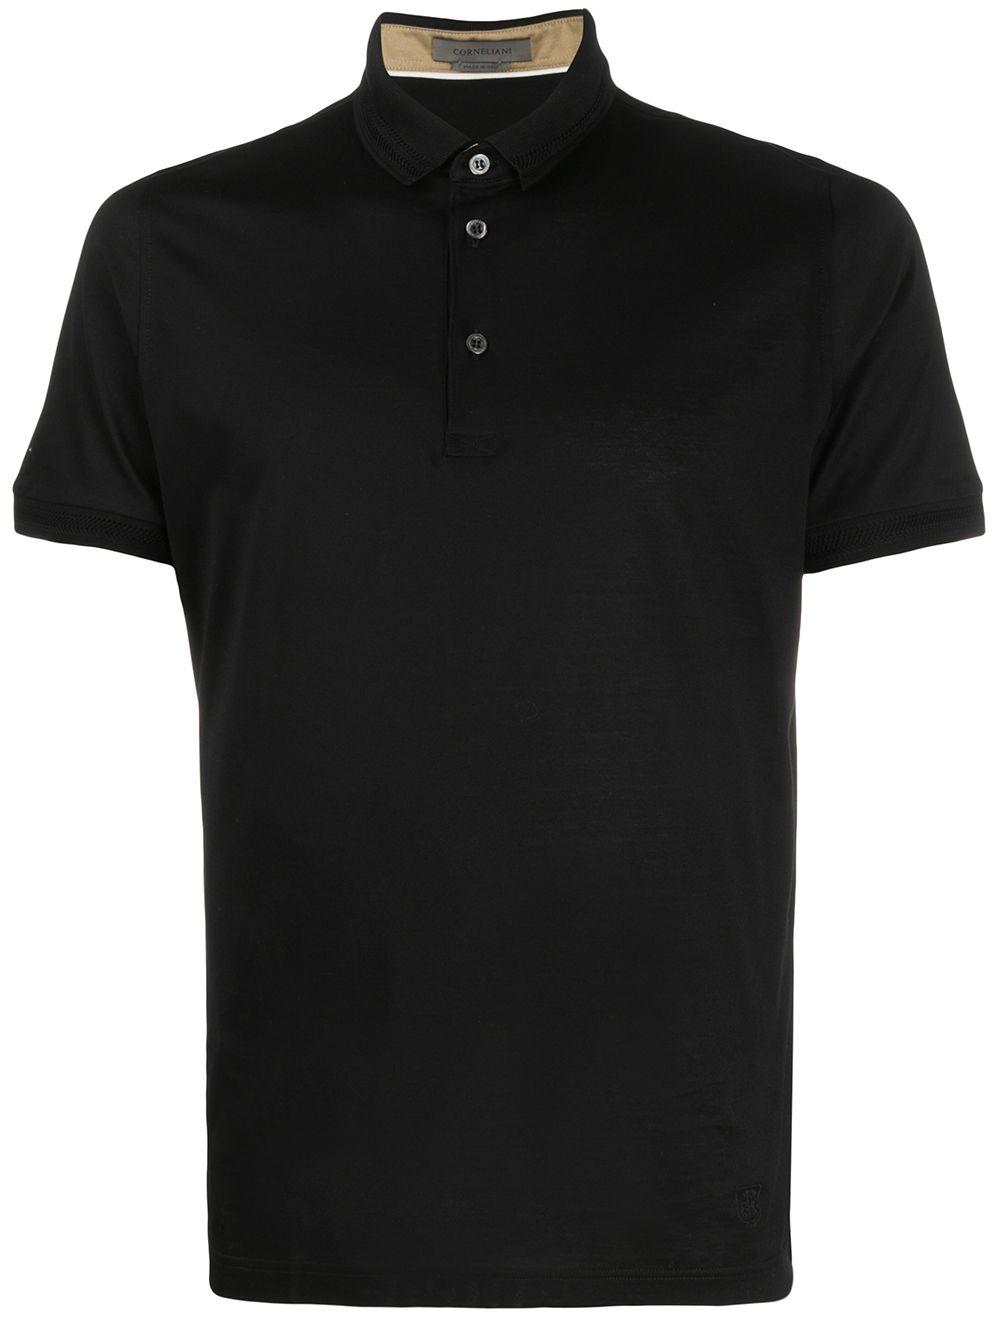 Corneliani Satin Knit Polo Shirt in Black for Men - Lyst